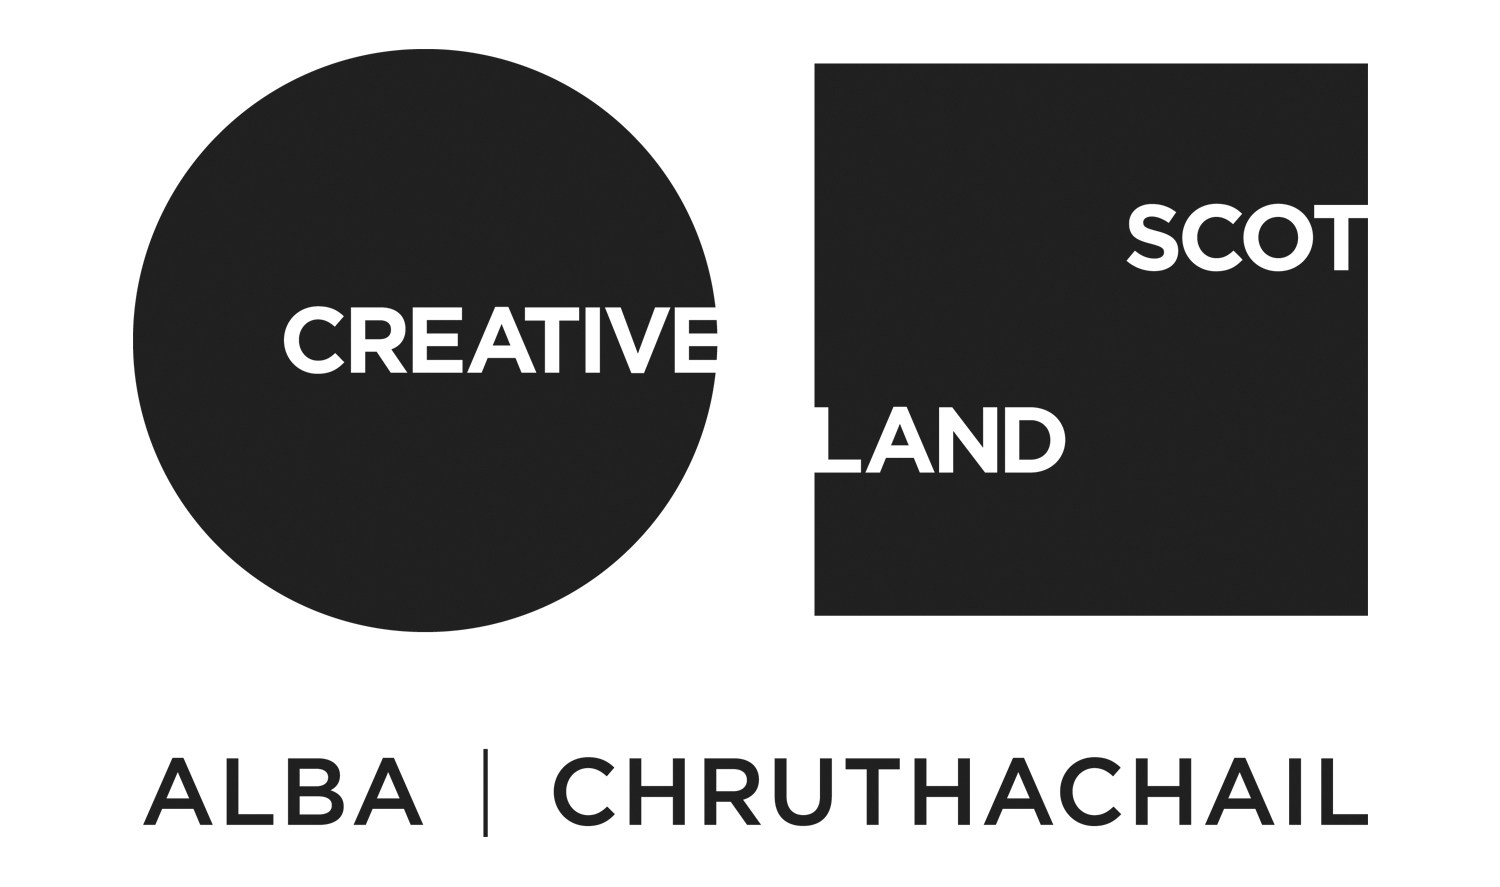 Creative Scotland Logo in black on white background